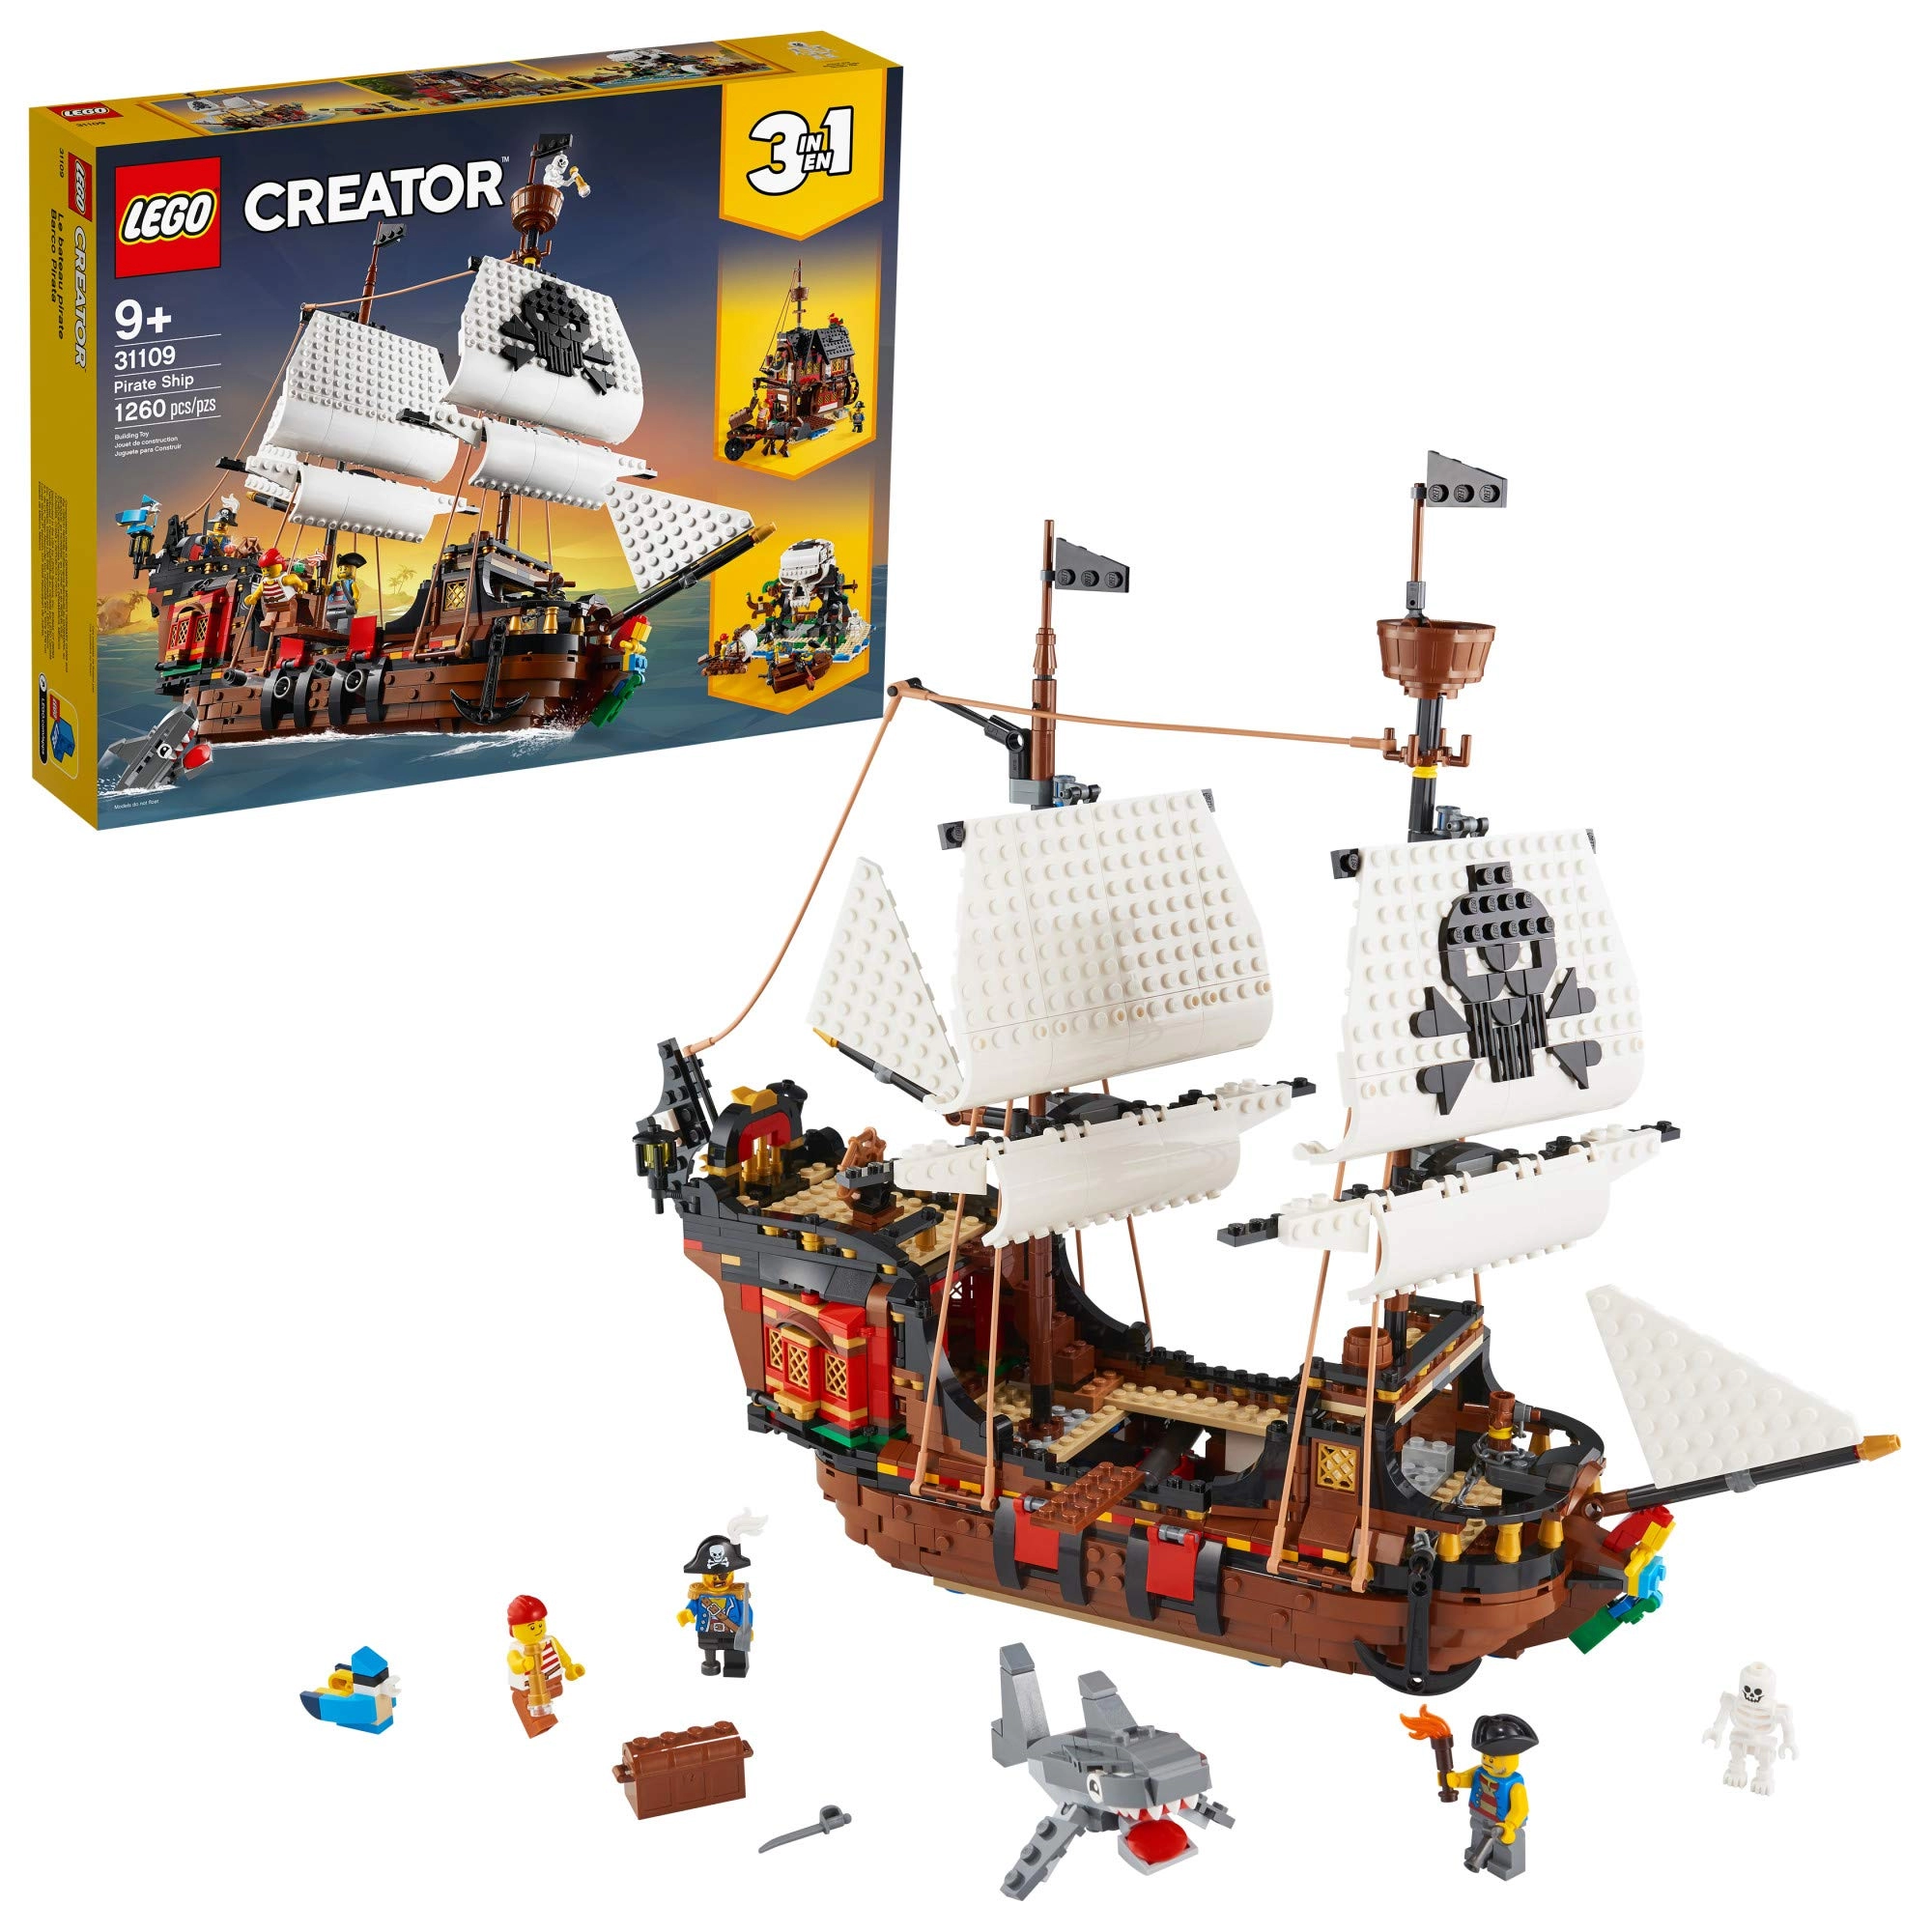 LEGO Pirate Ship